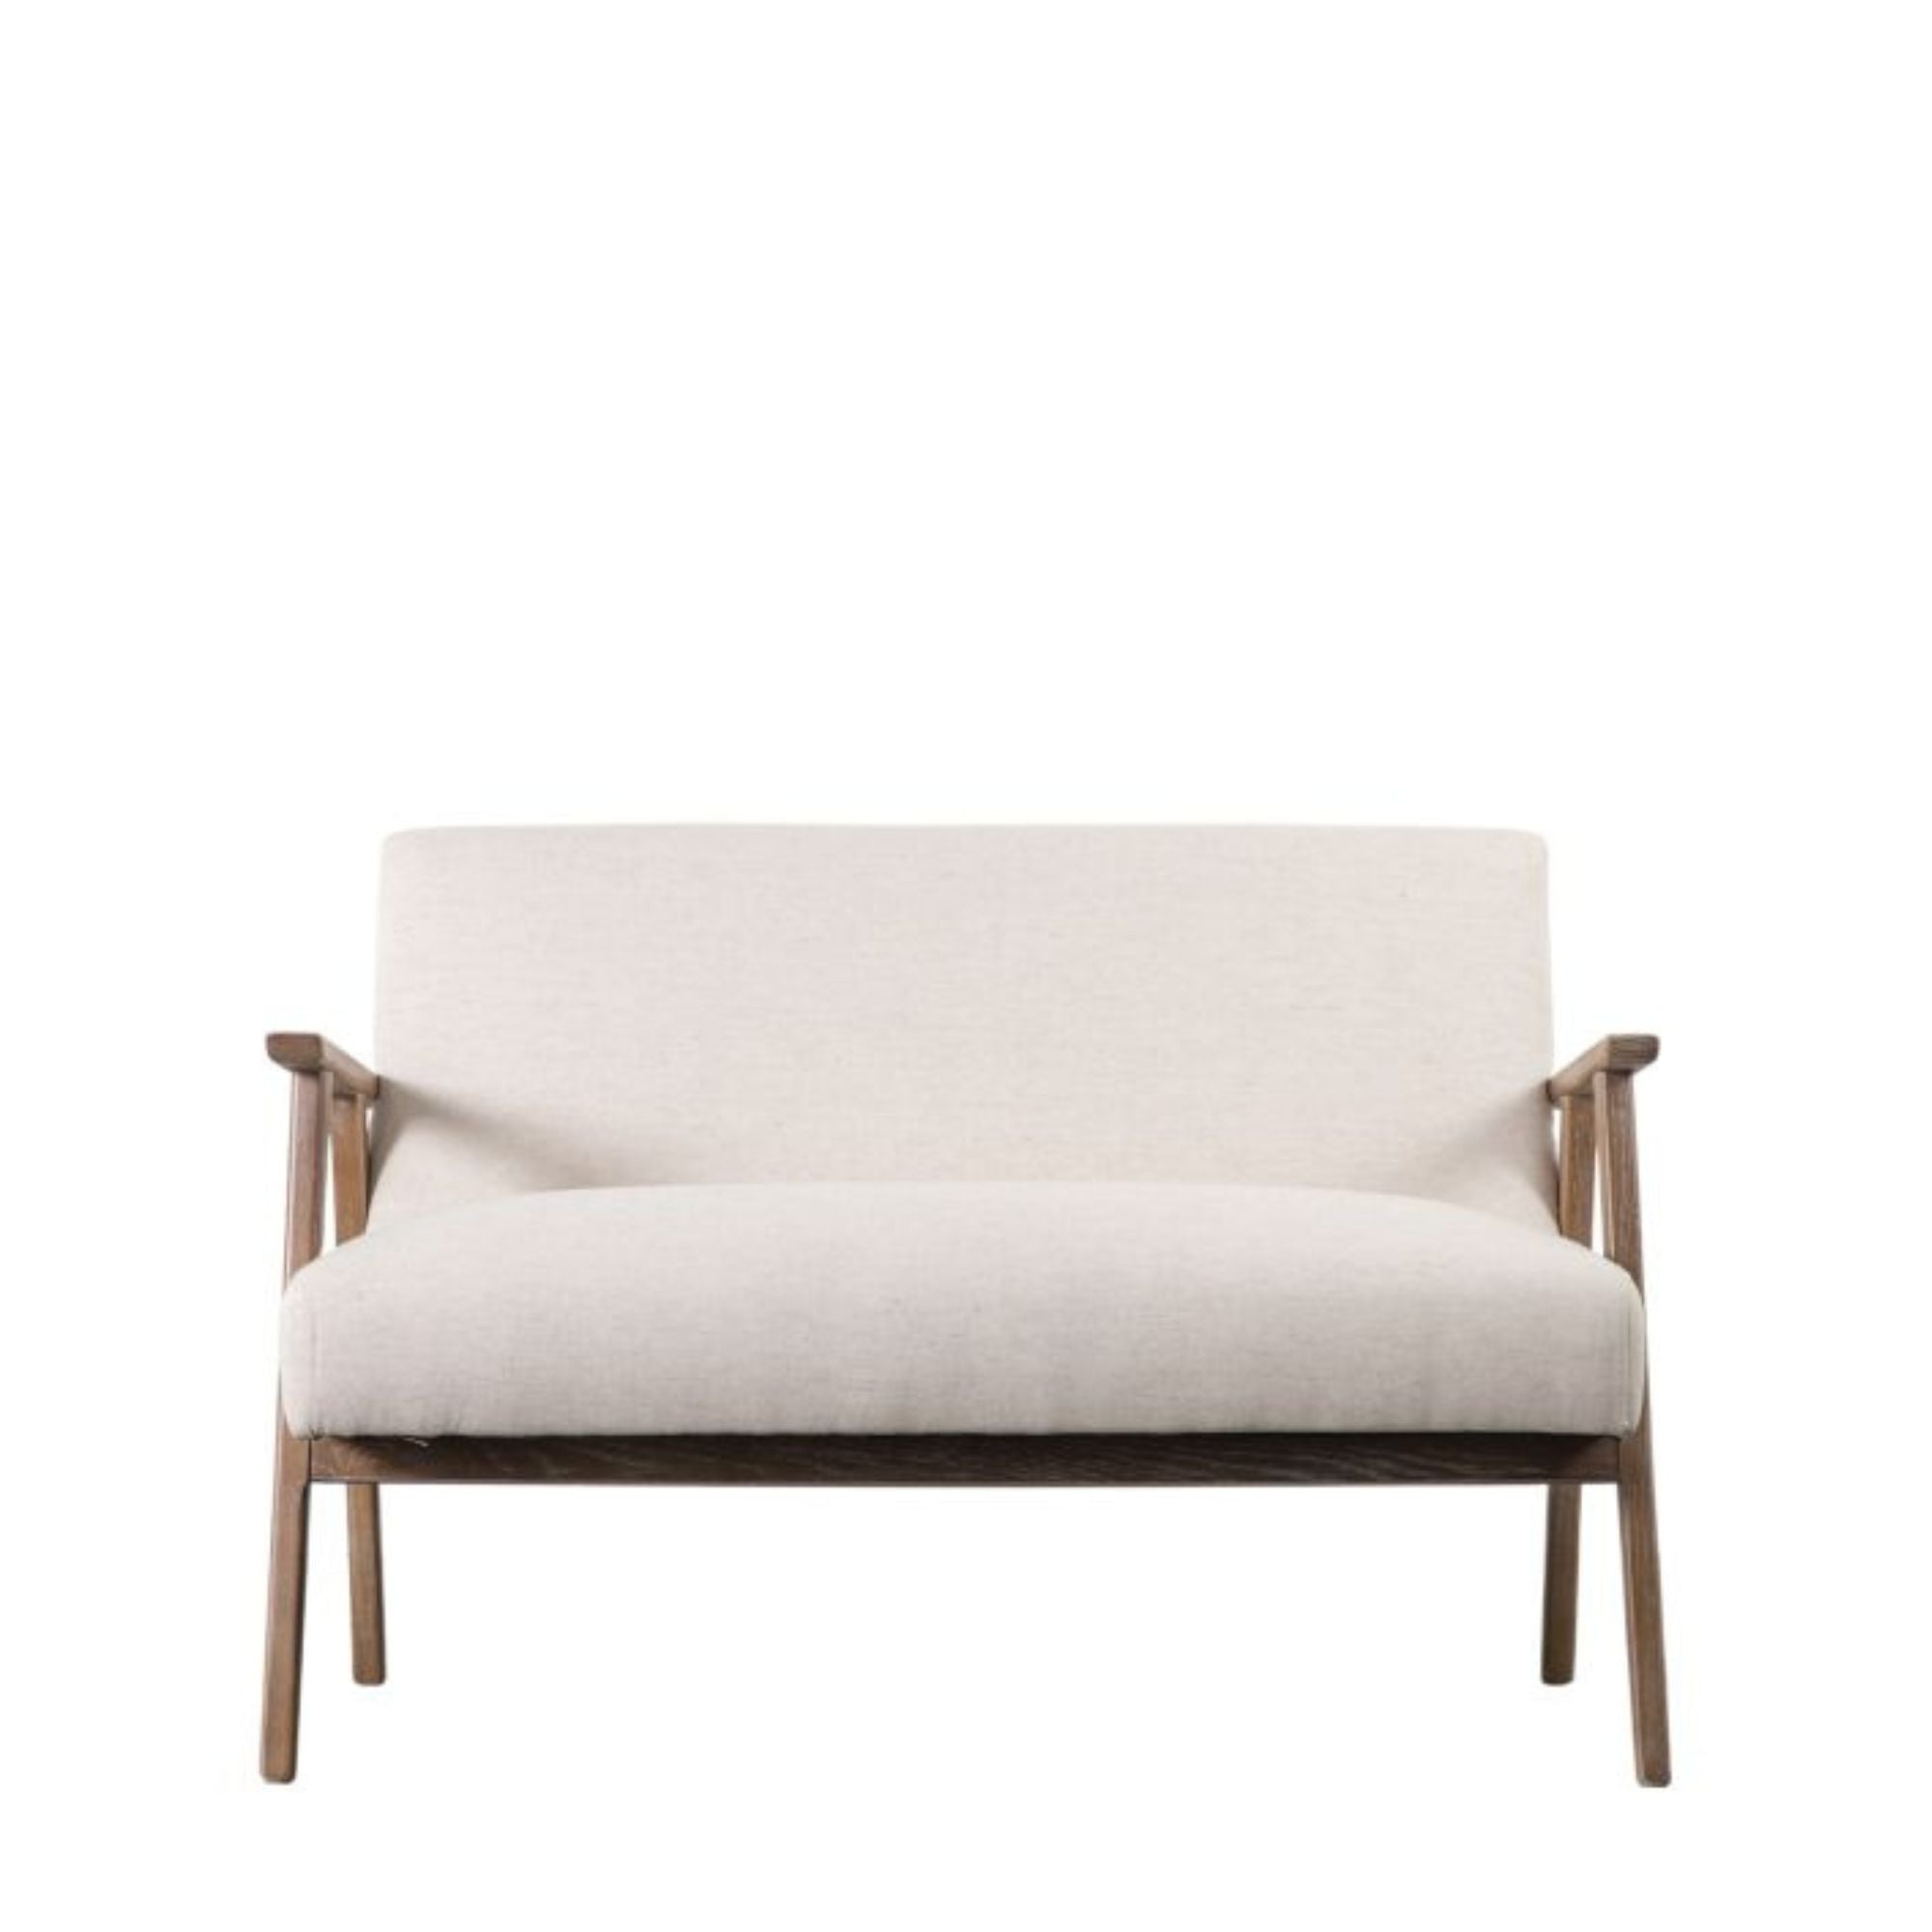 Barret mid century style 2 seat sofa in natural linen | malletandplane.com